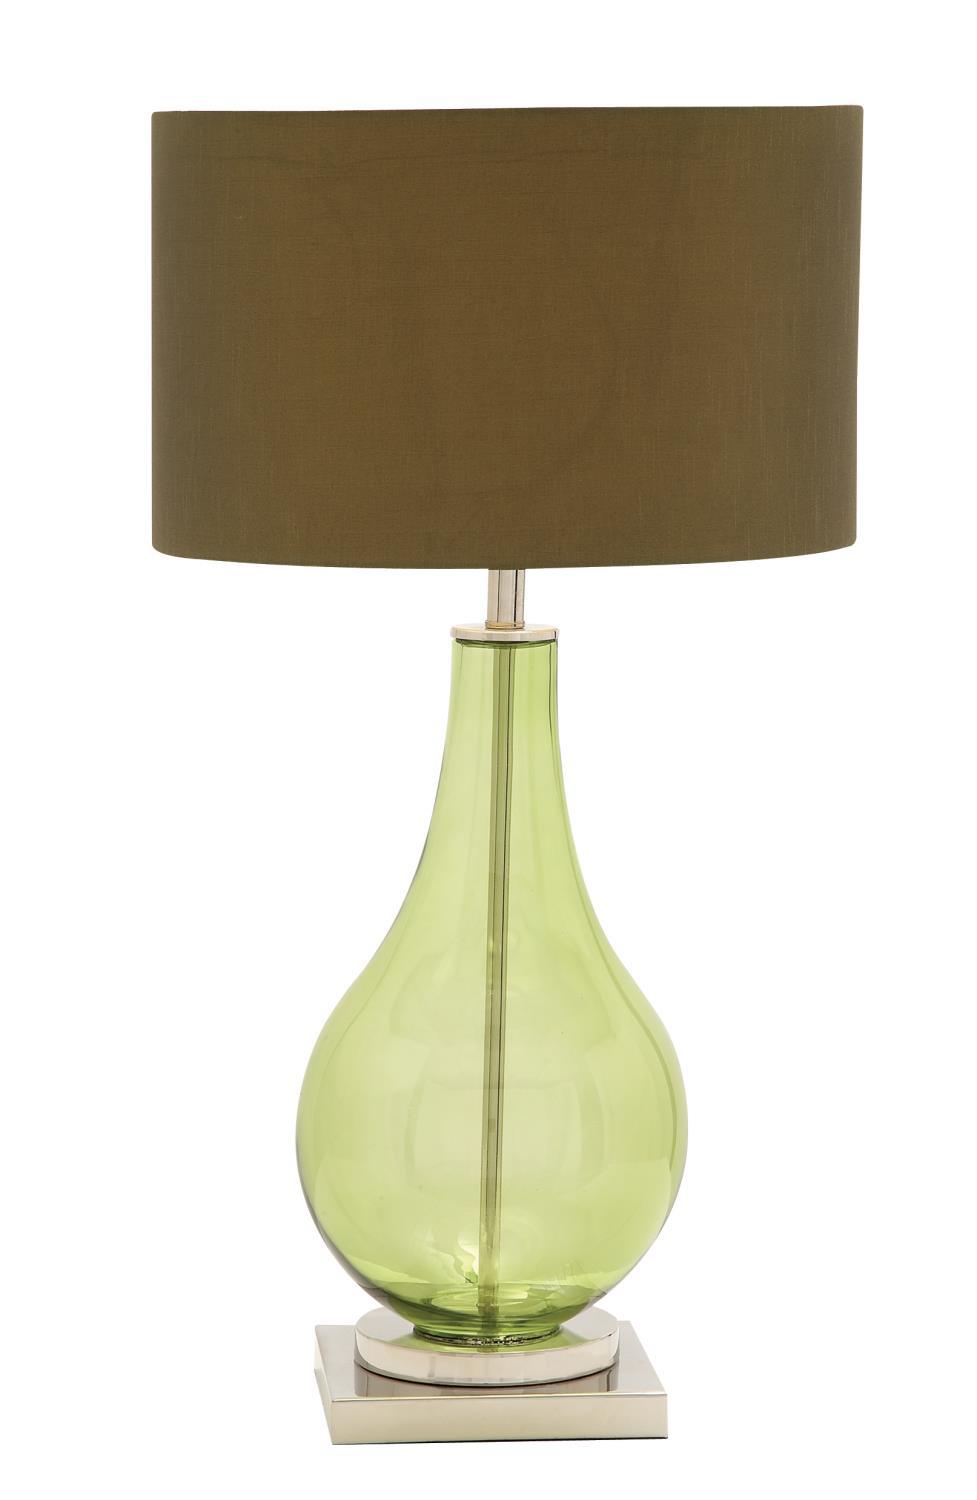 Unique Style The Greenish Glass Chrome Table Lamp Home Decor 40173